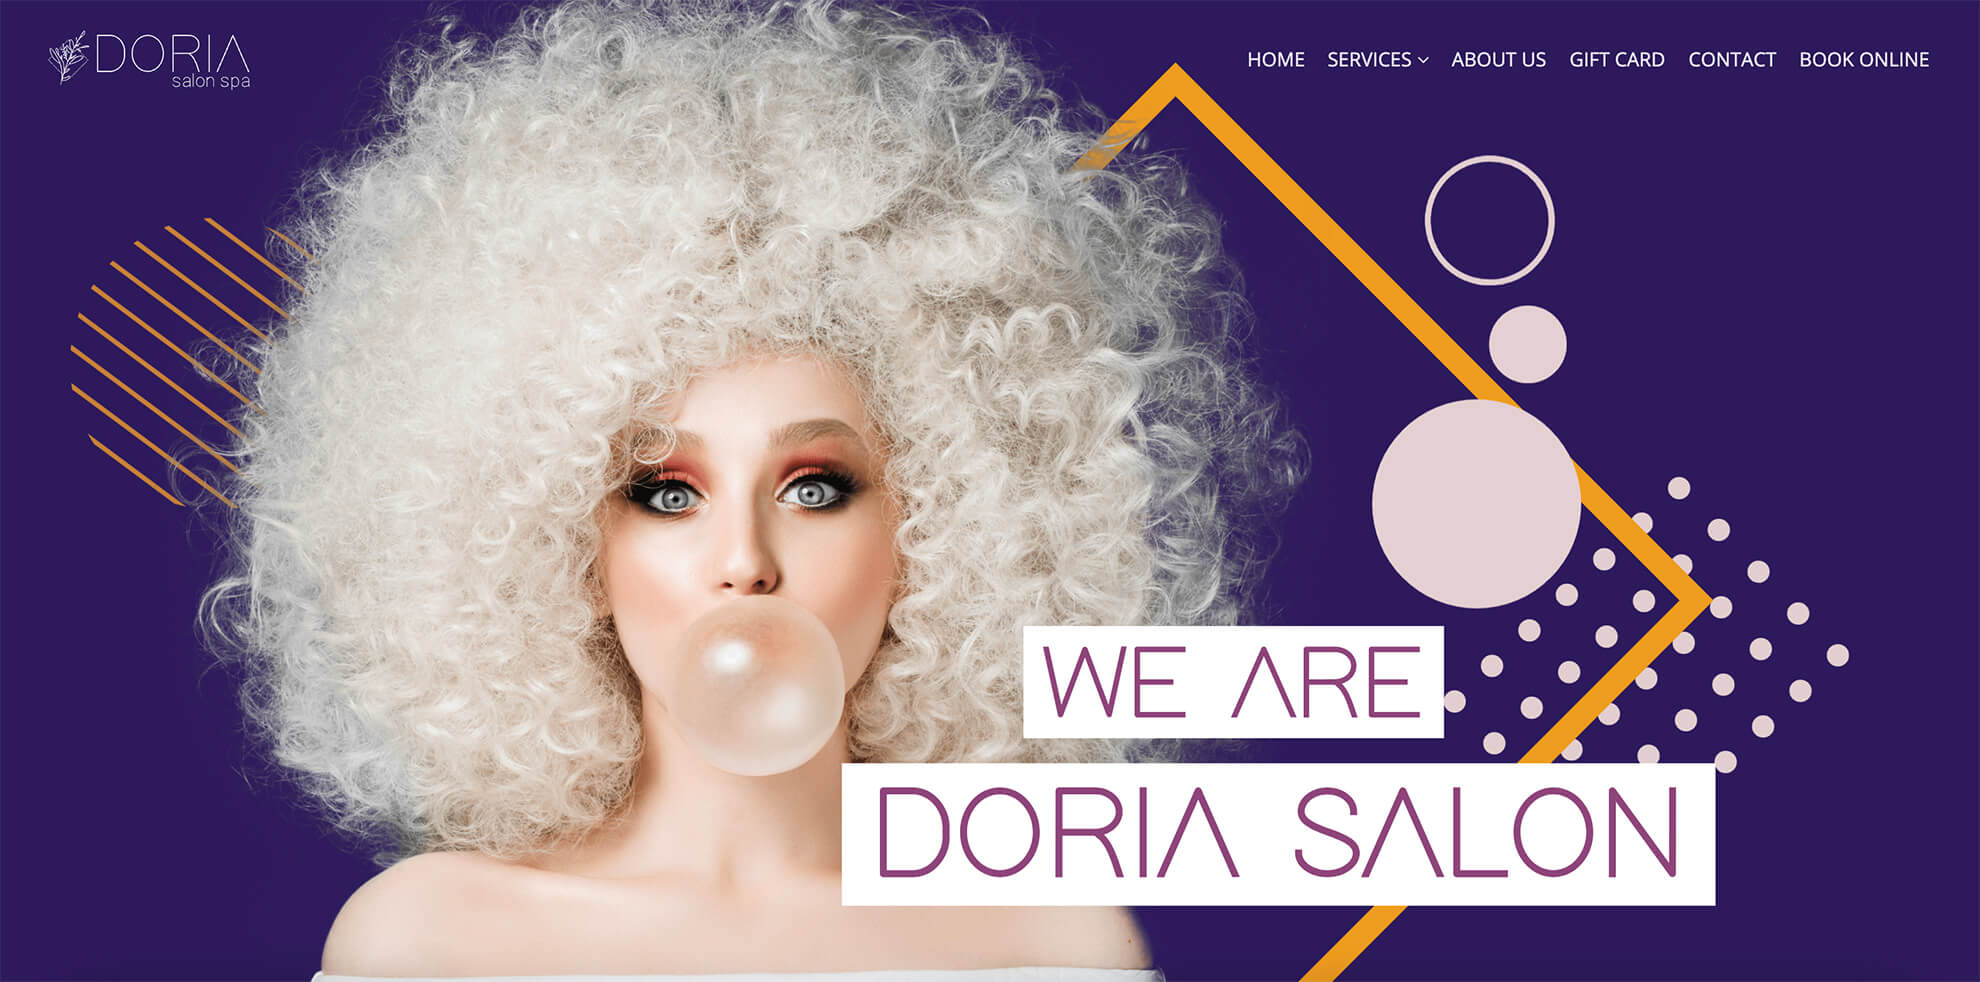 https://alinemedeiros.com/wp-content/uploads/2020/07/Doria-Salon-home.jpg